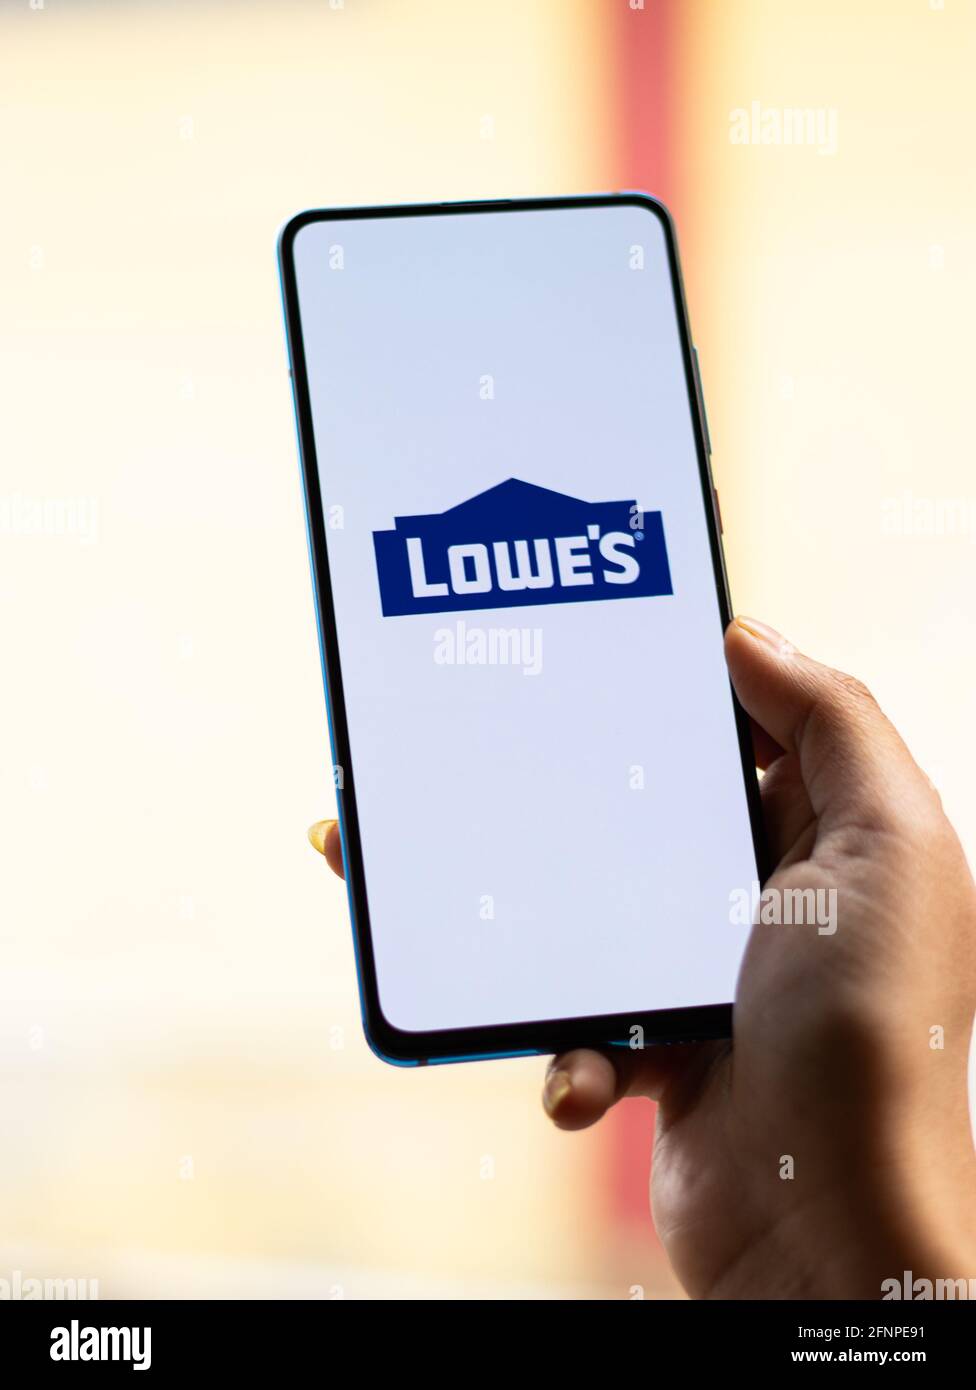 Assam, india - May 18, 2021 : Lowe's logo on phone screen stock image. Stock Photo